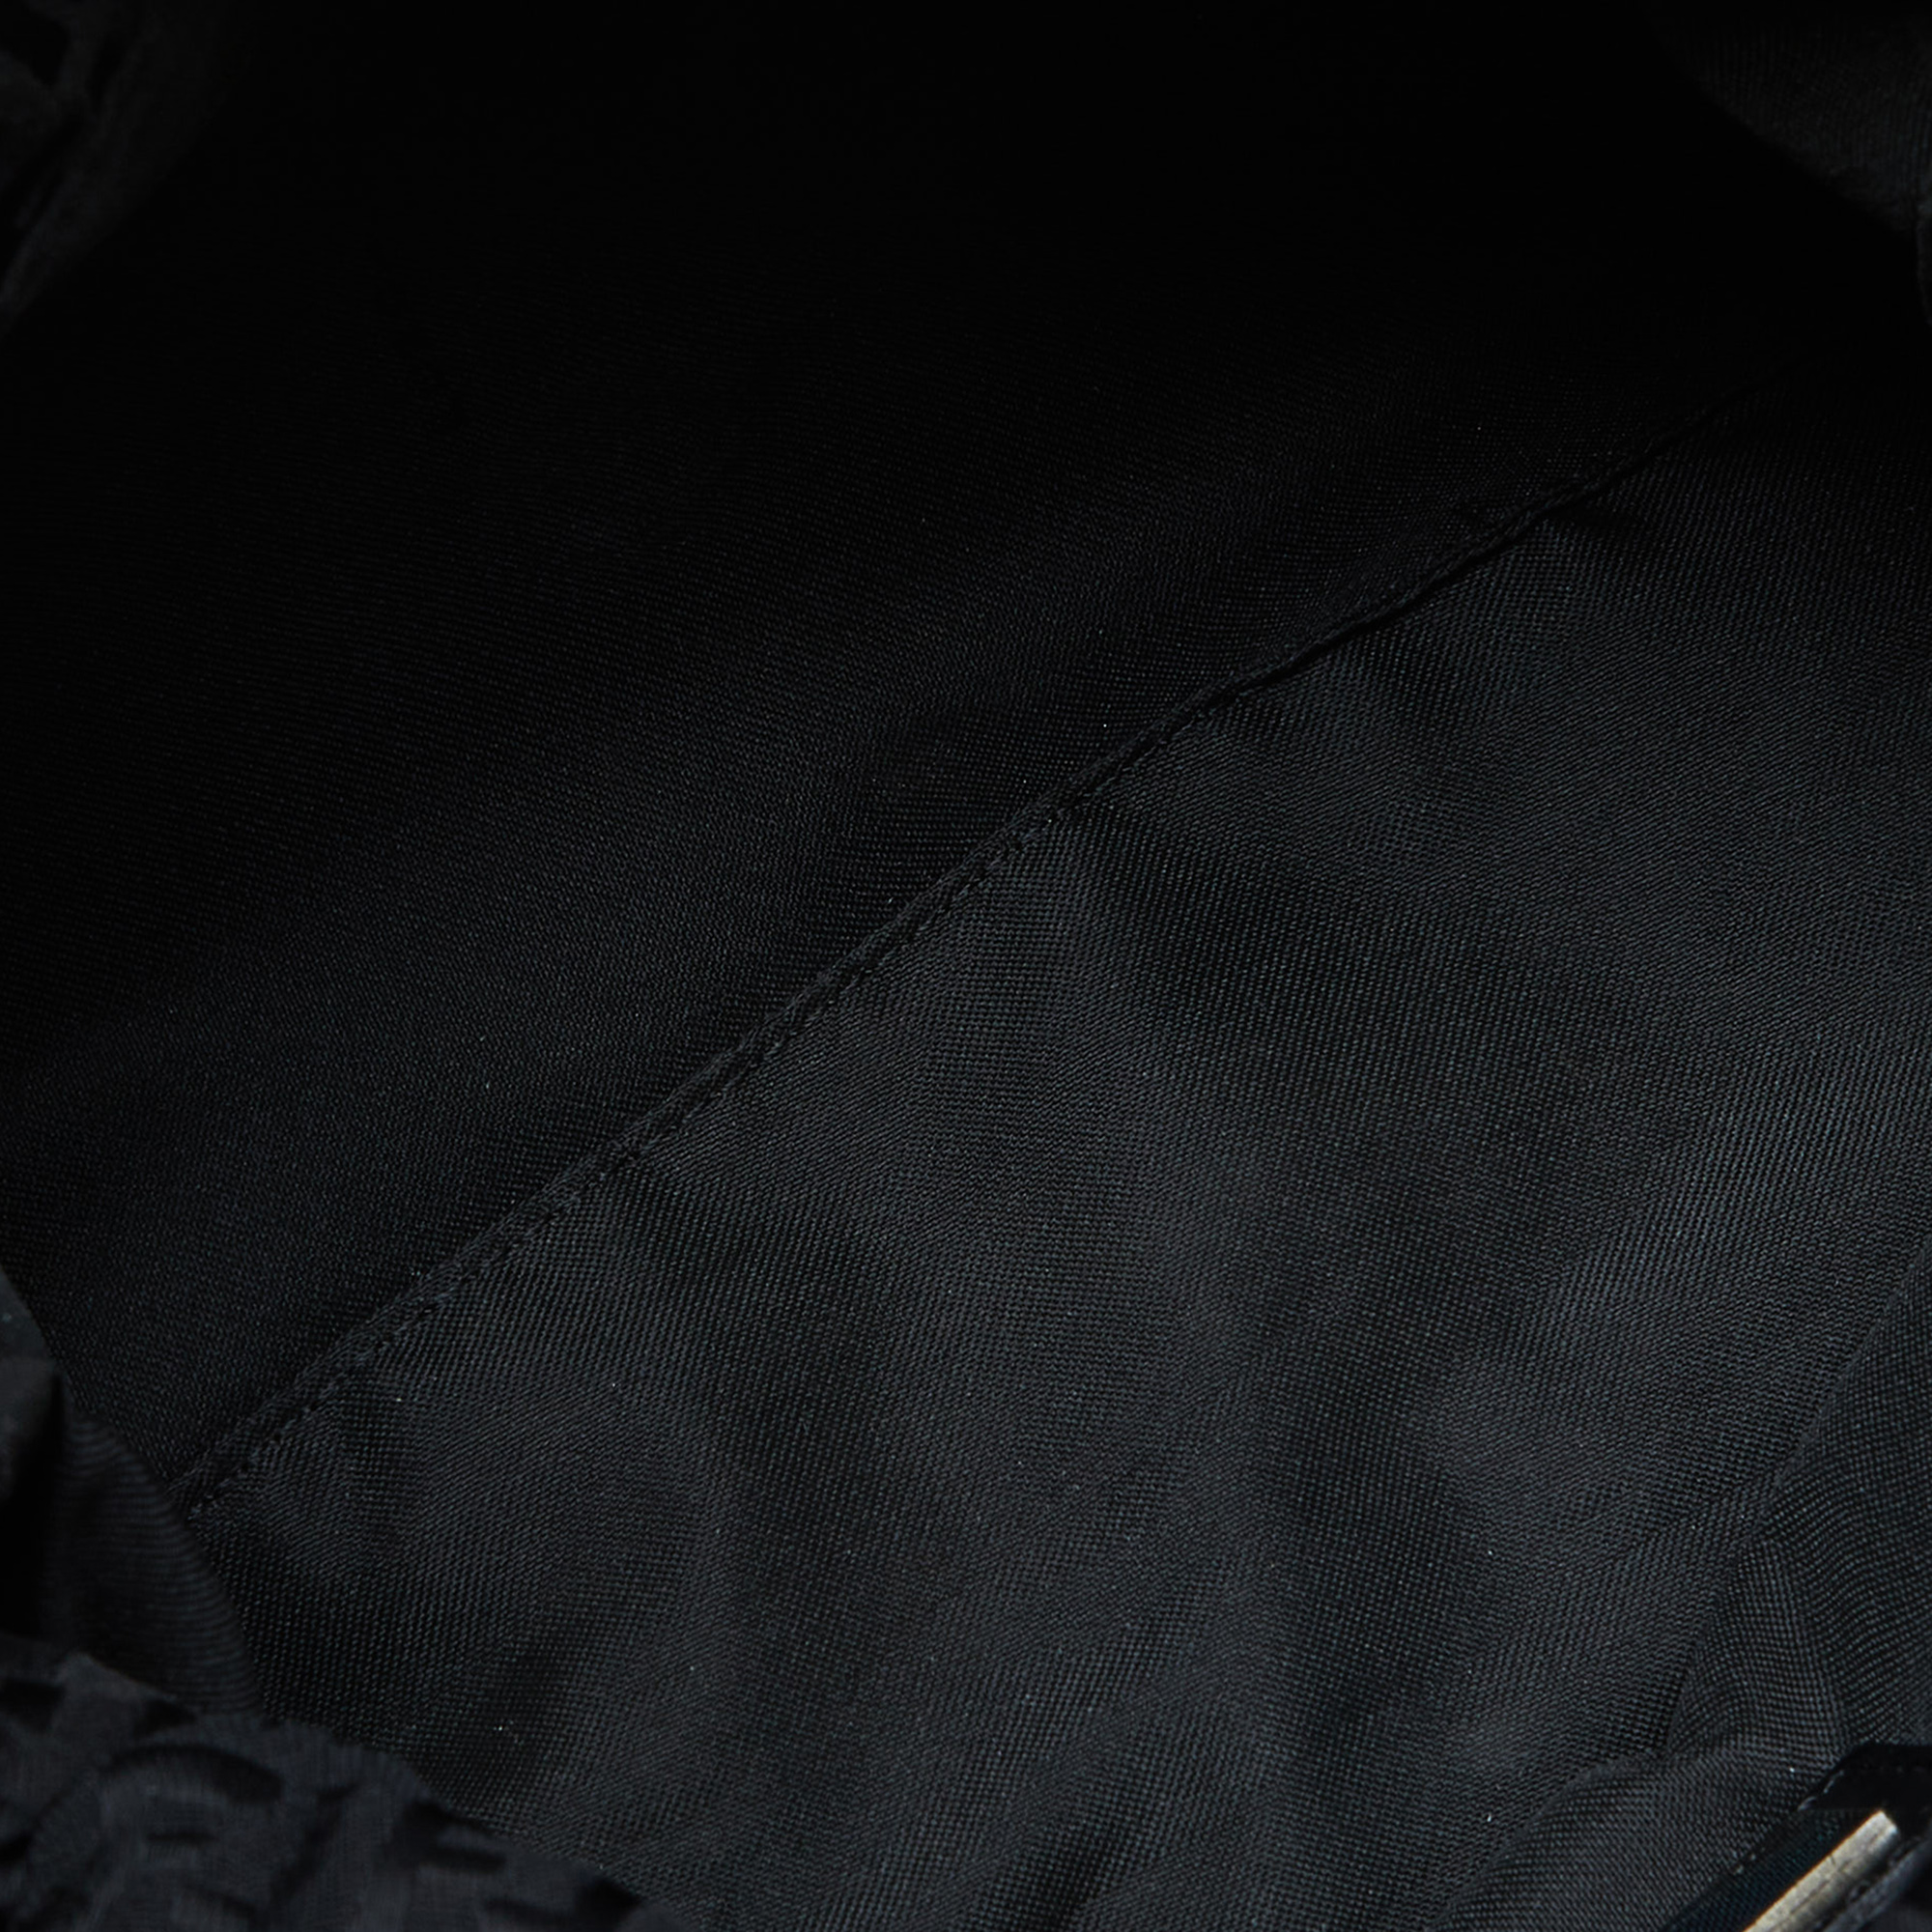 Valentino Black Leather Small Glam Lock Crossbody Bag